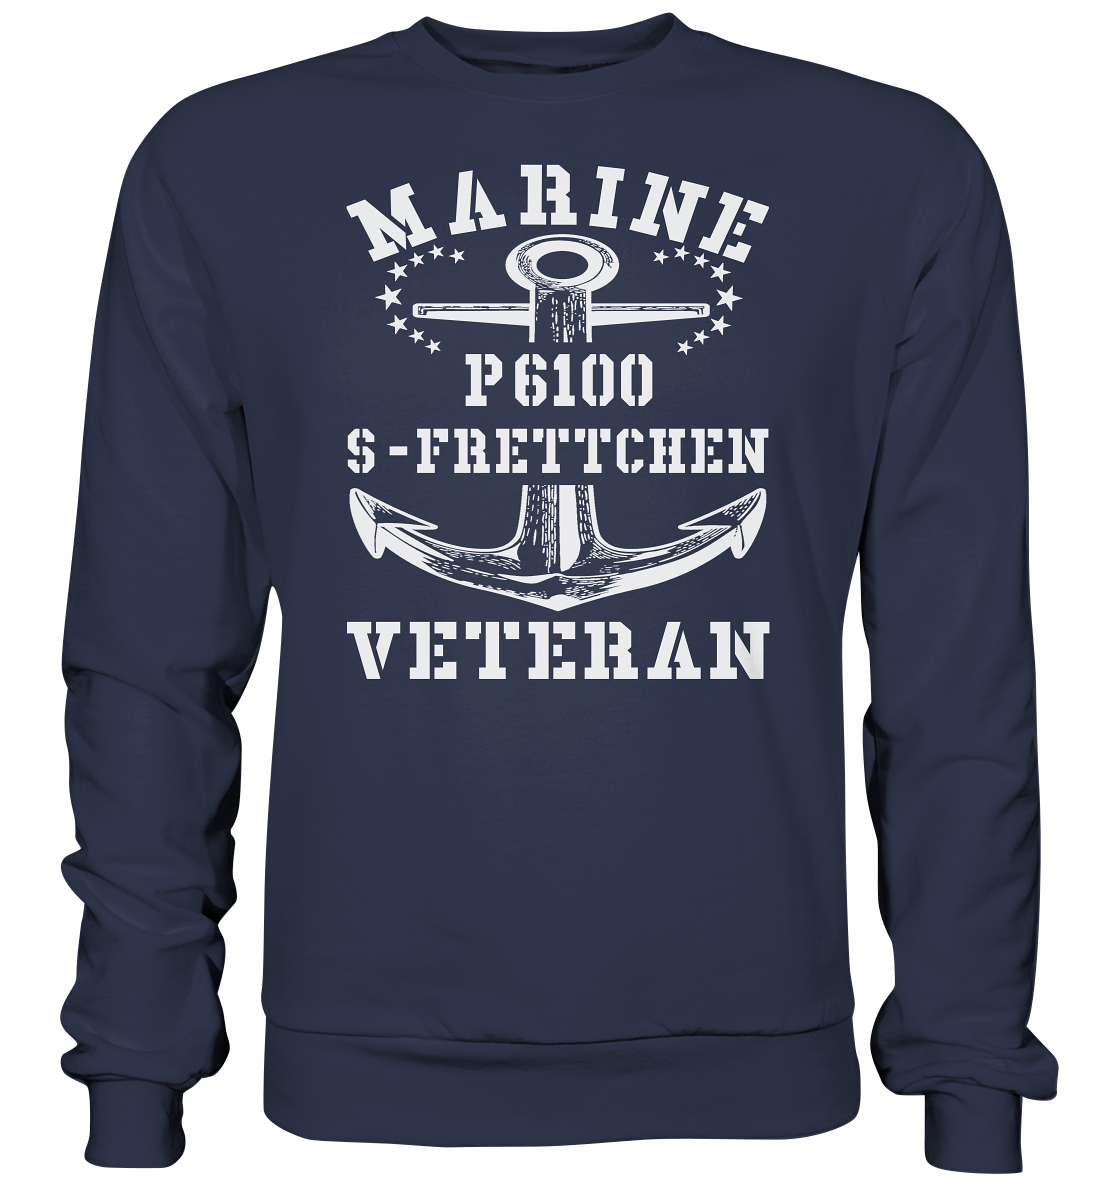 P6100 S-FRETTCHEN Marine Veteran - Premium Sweatshirt